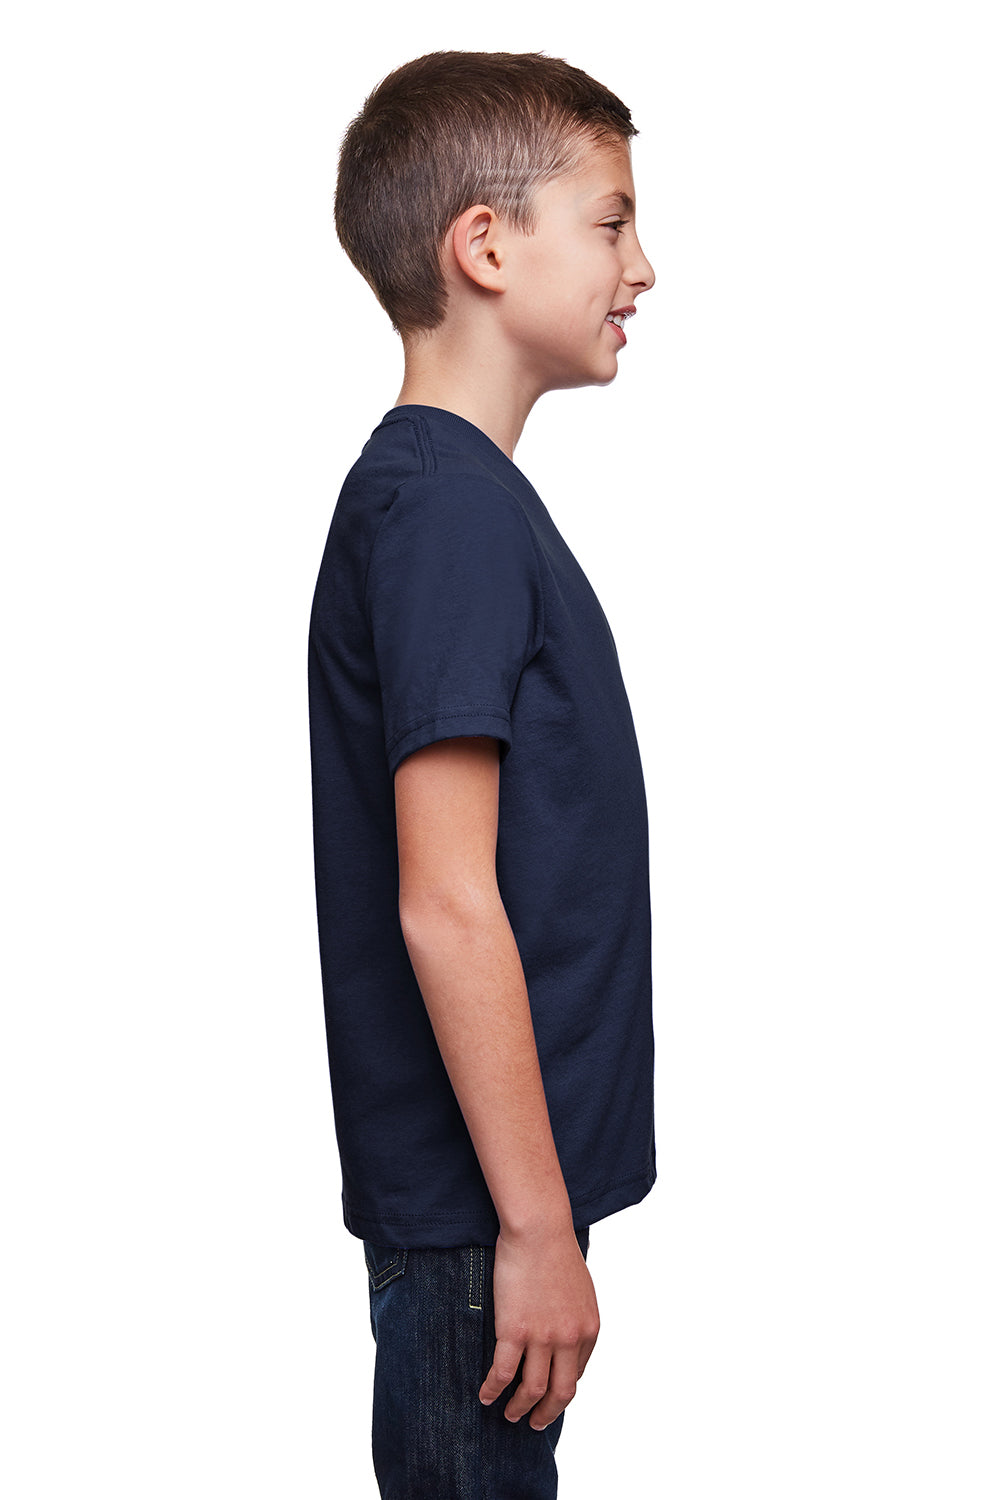 Next Level 4212 Youth Eco Performance Moisture Wicking Short Sleeve Crewneck T-Shirt Navy Blue Side